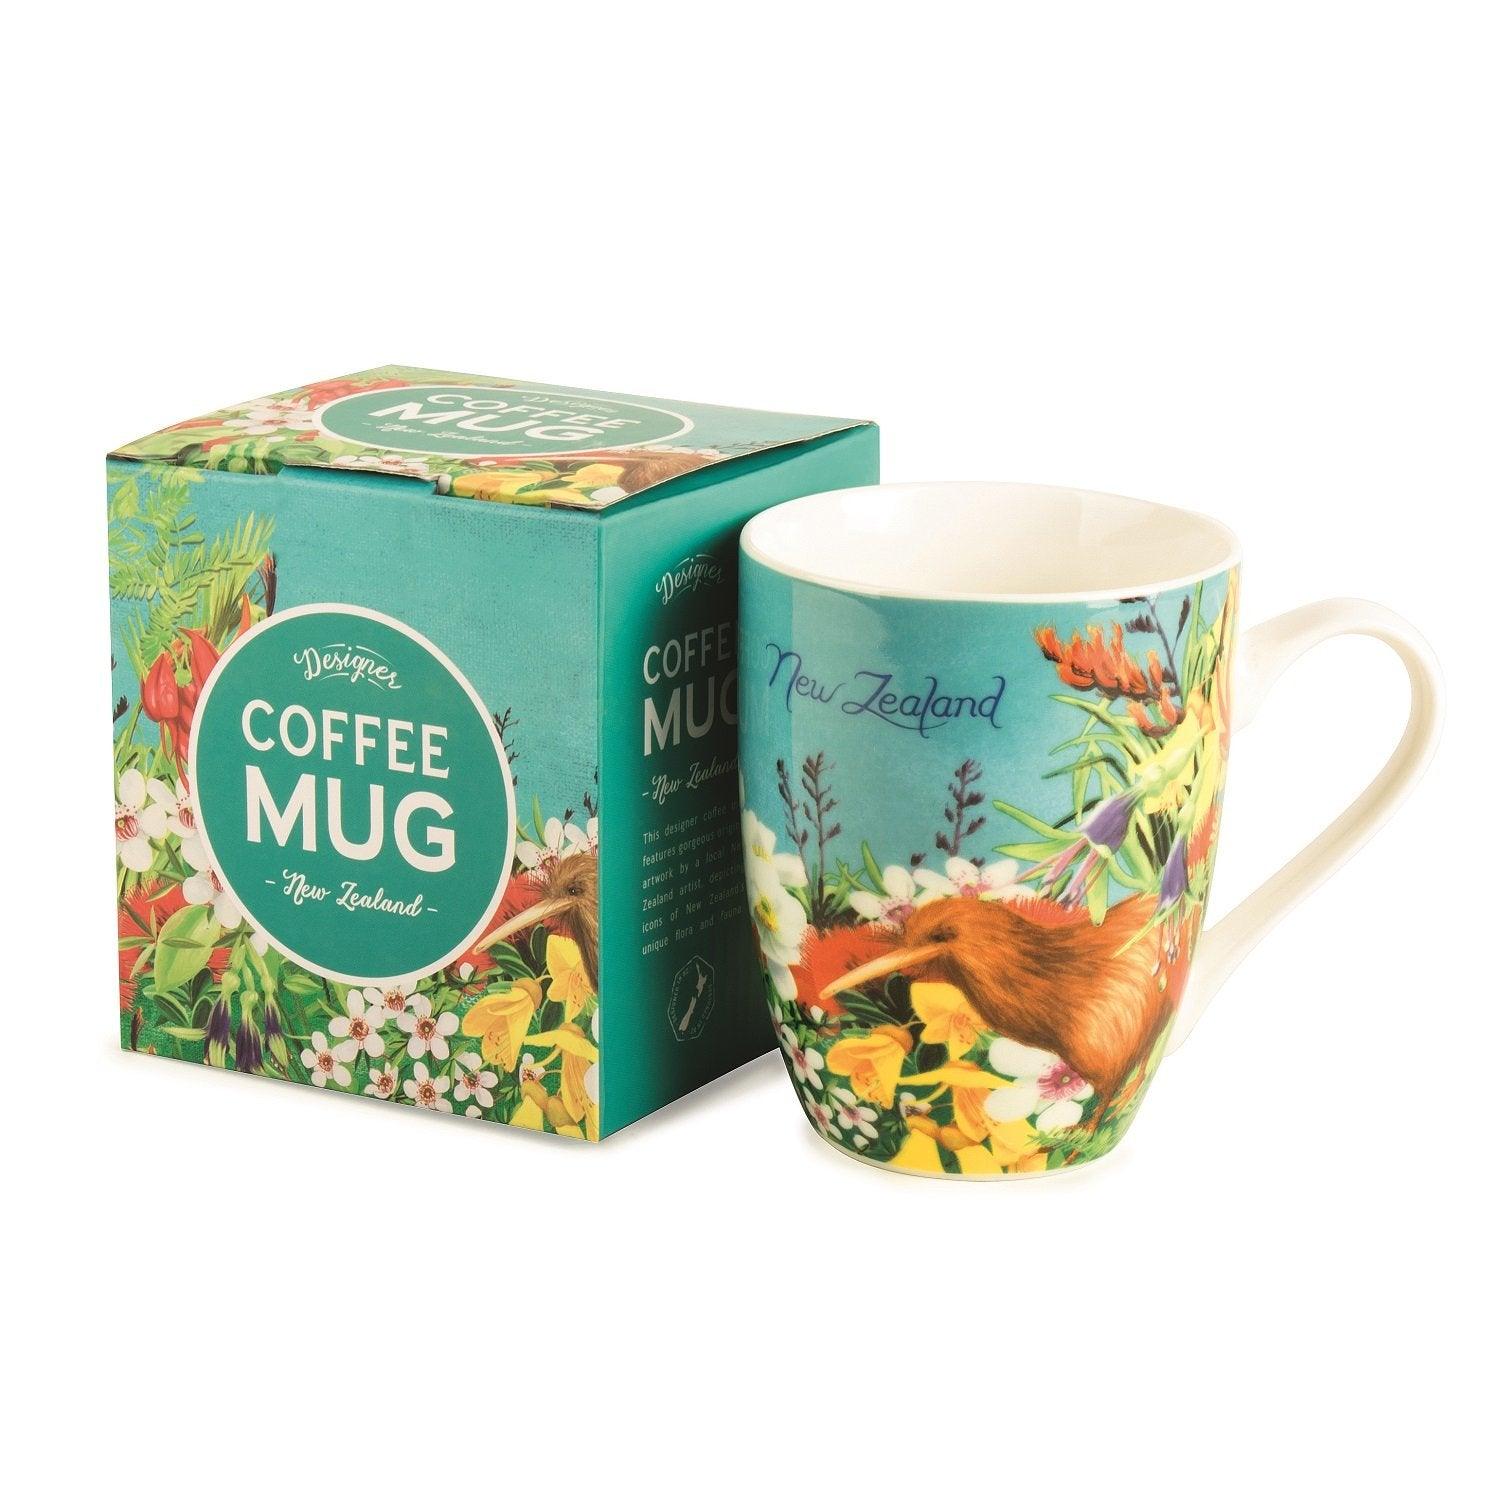 Coffee mug with New Zealand garden and a kiwi bird image next to box.